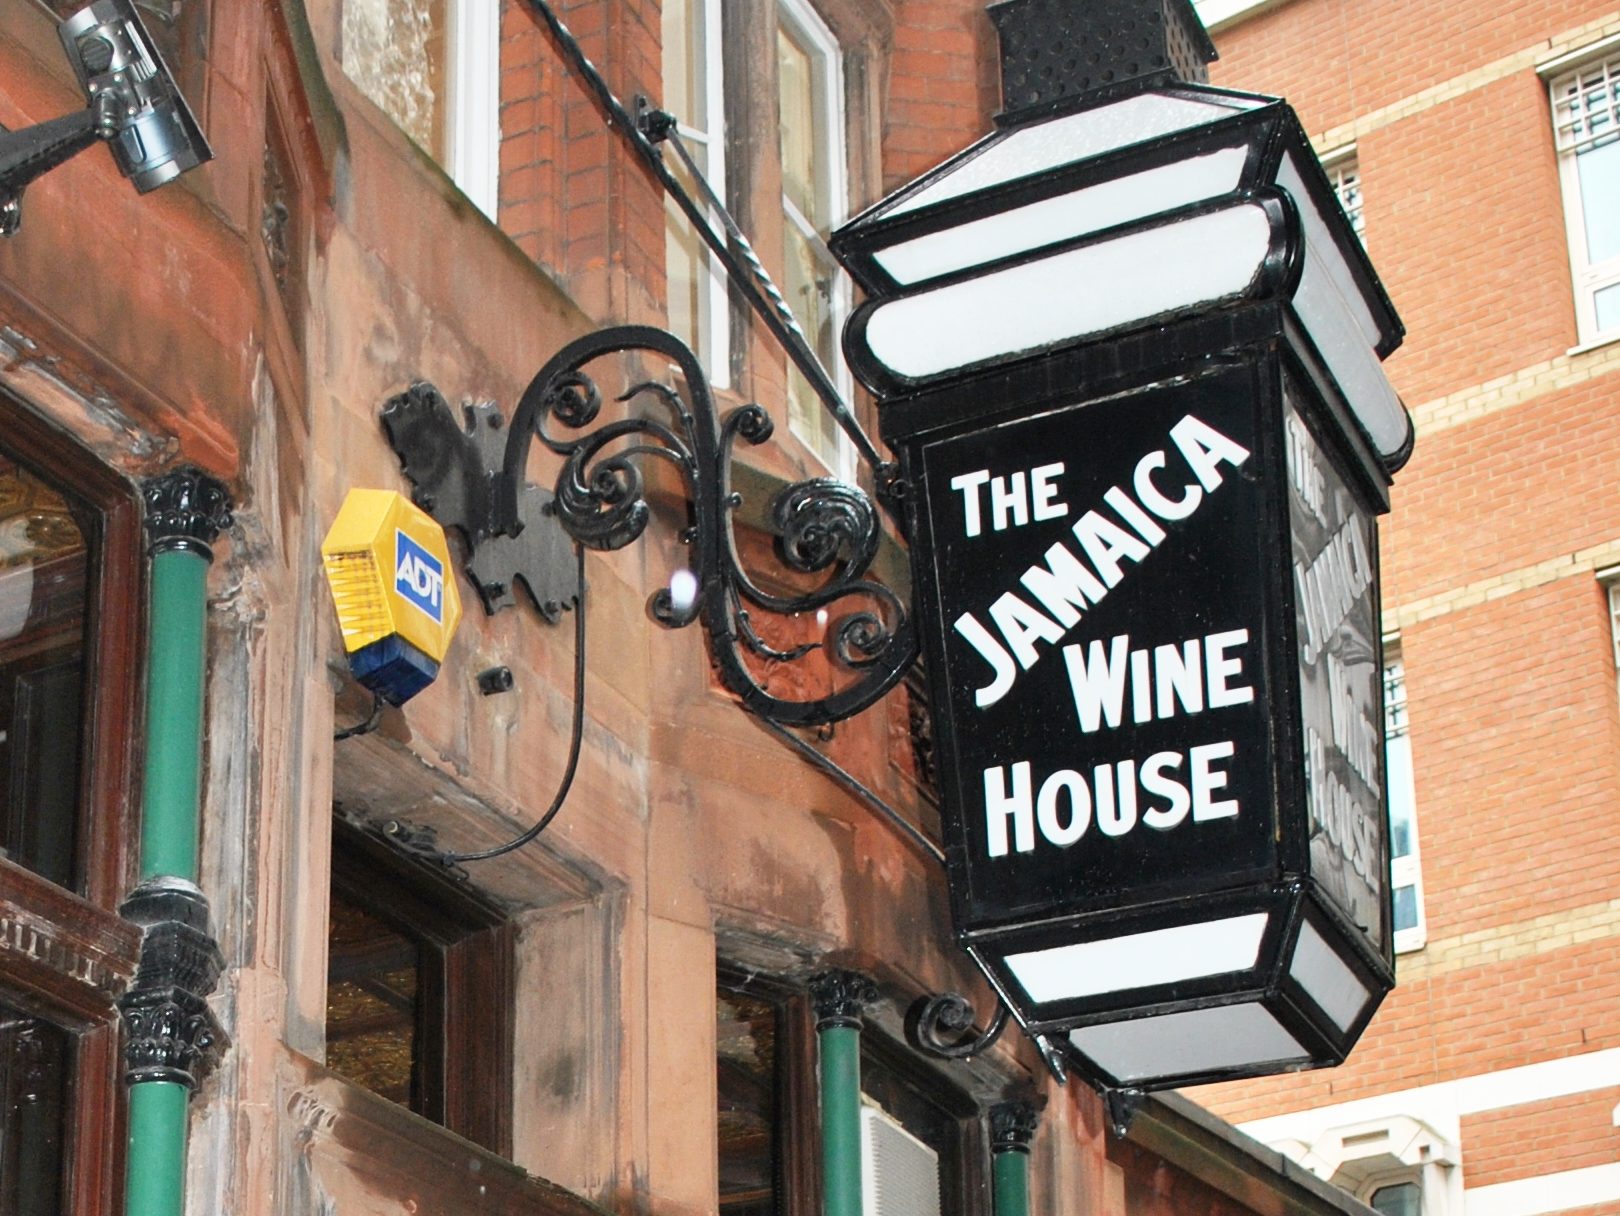 The Jamaica Wine House